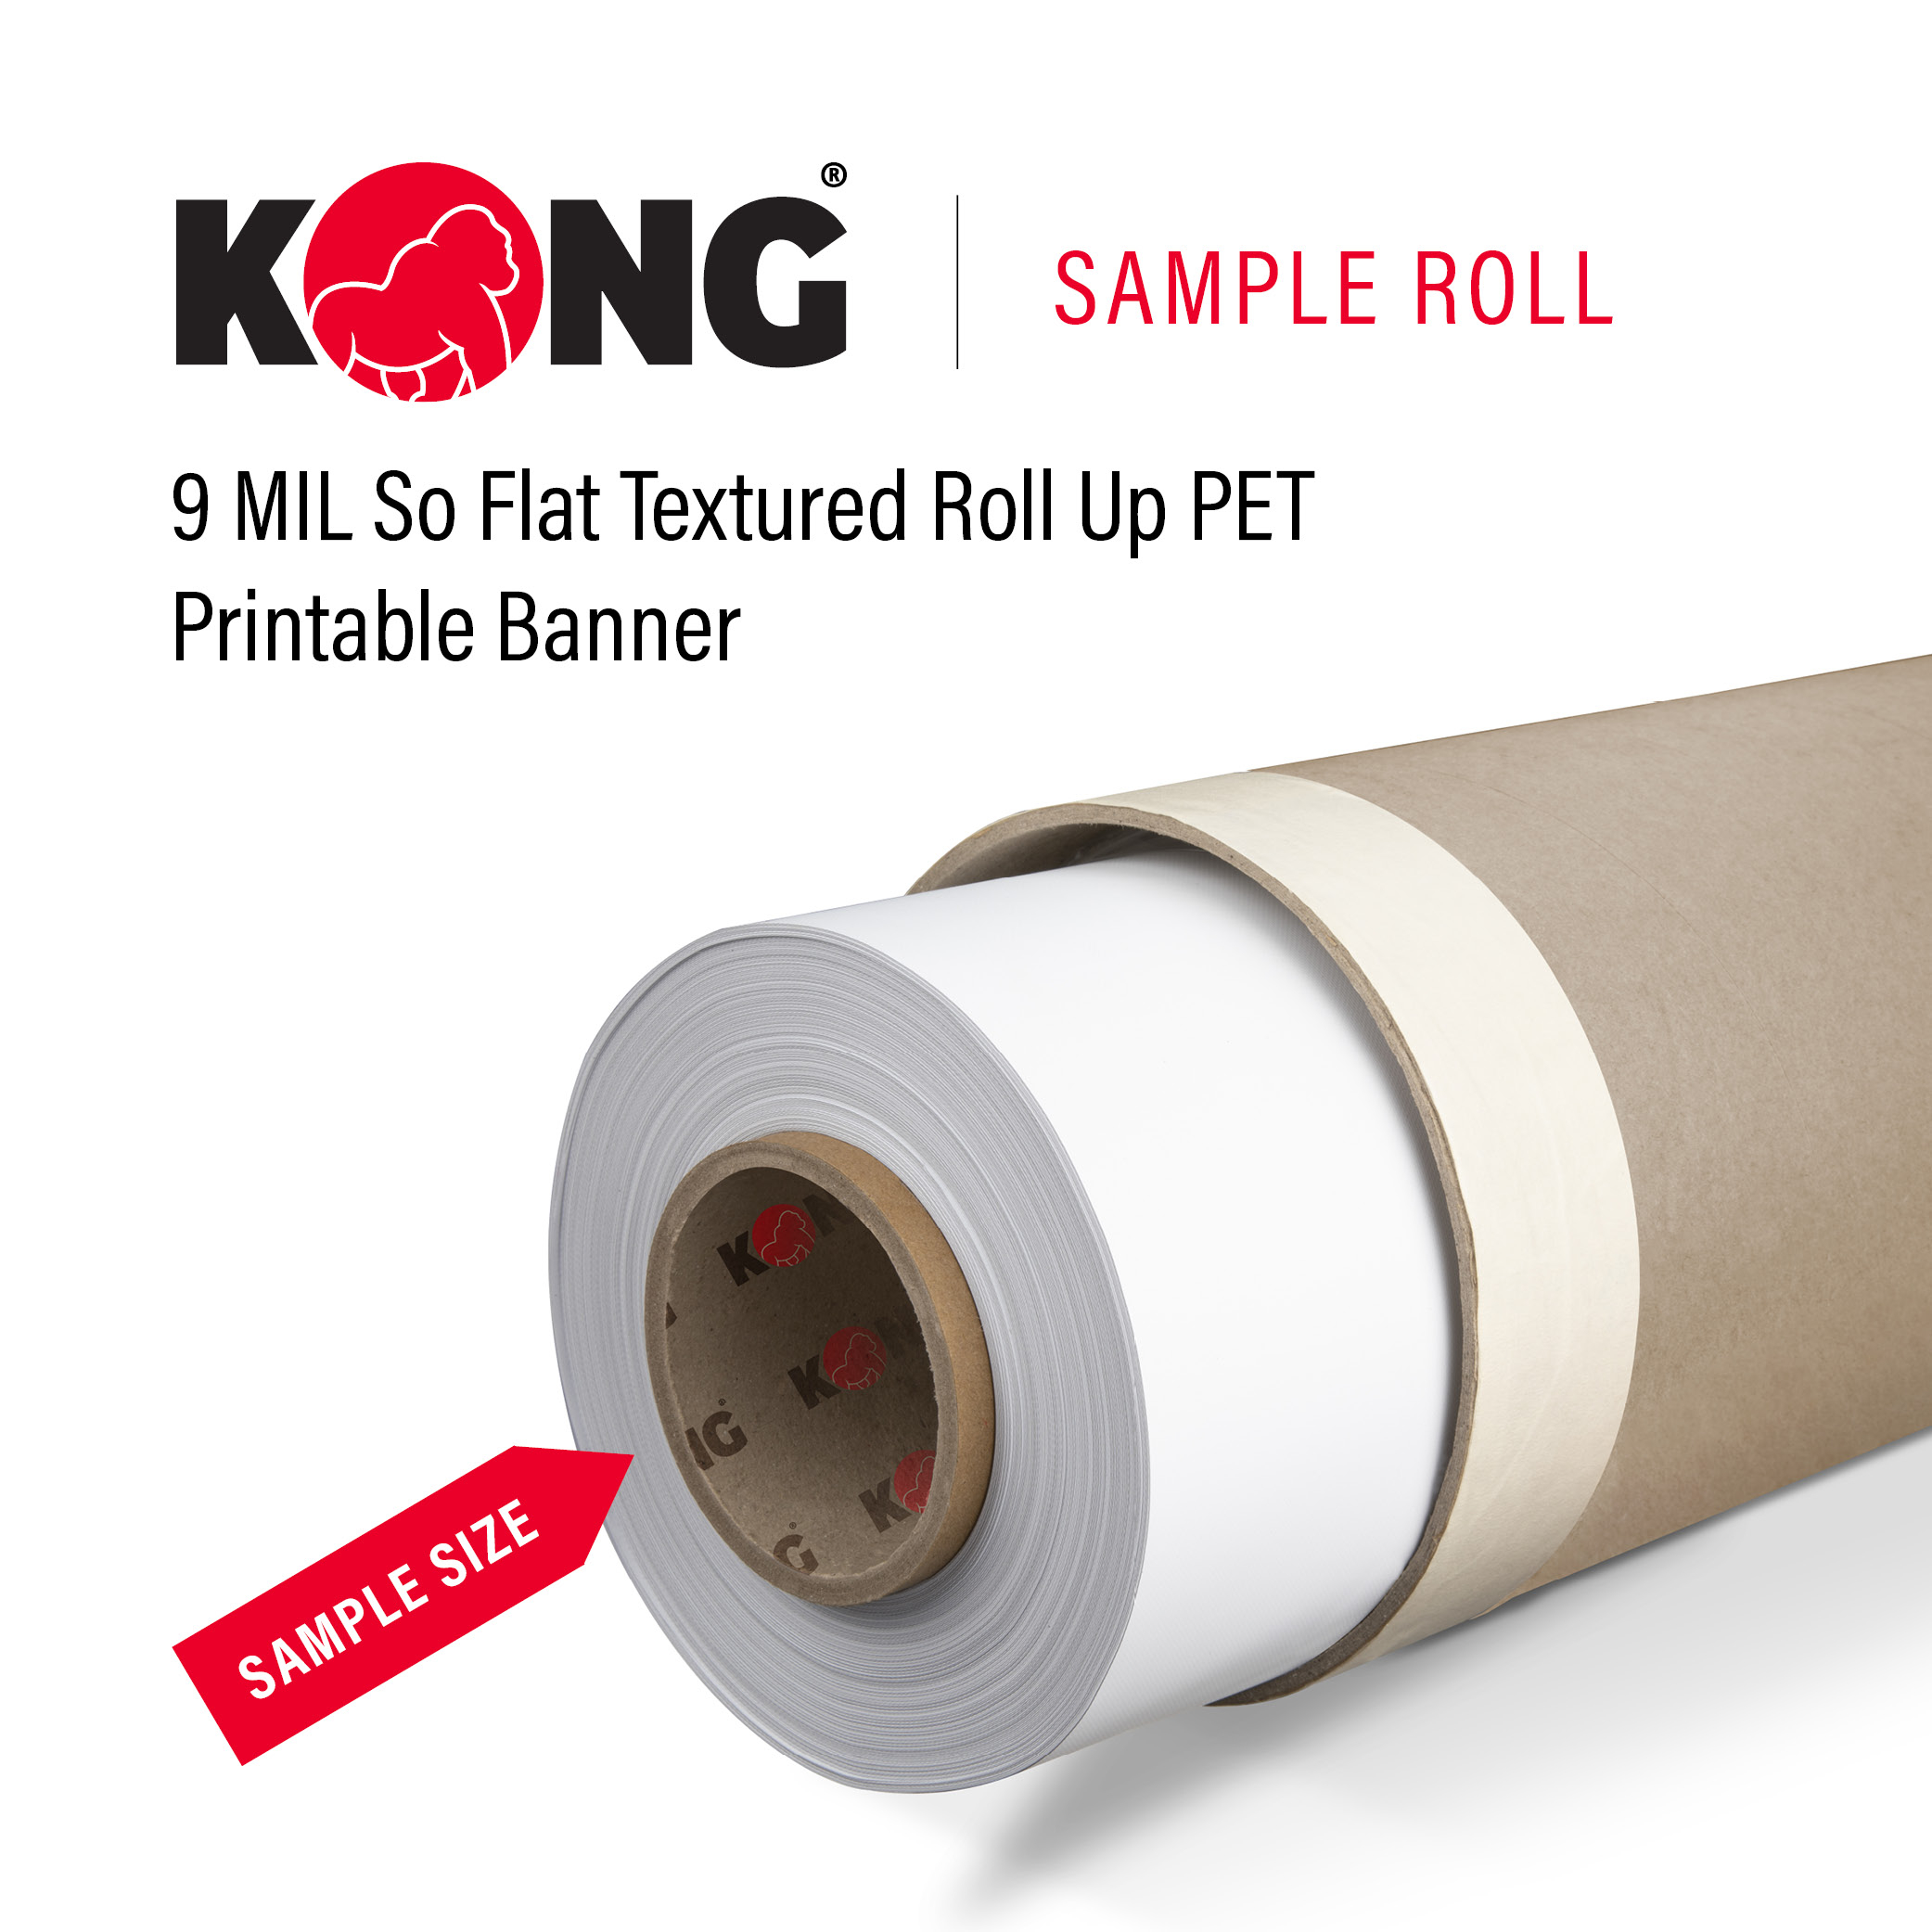 36'' x 20' Kong Banner Roll - 9 Mil So Flat Textured Roll Up PET Banner (Sample Roll)